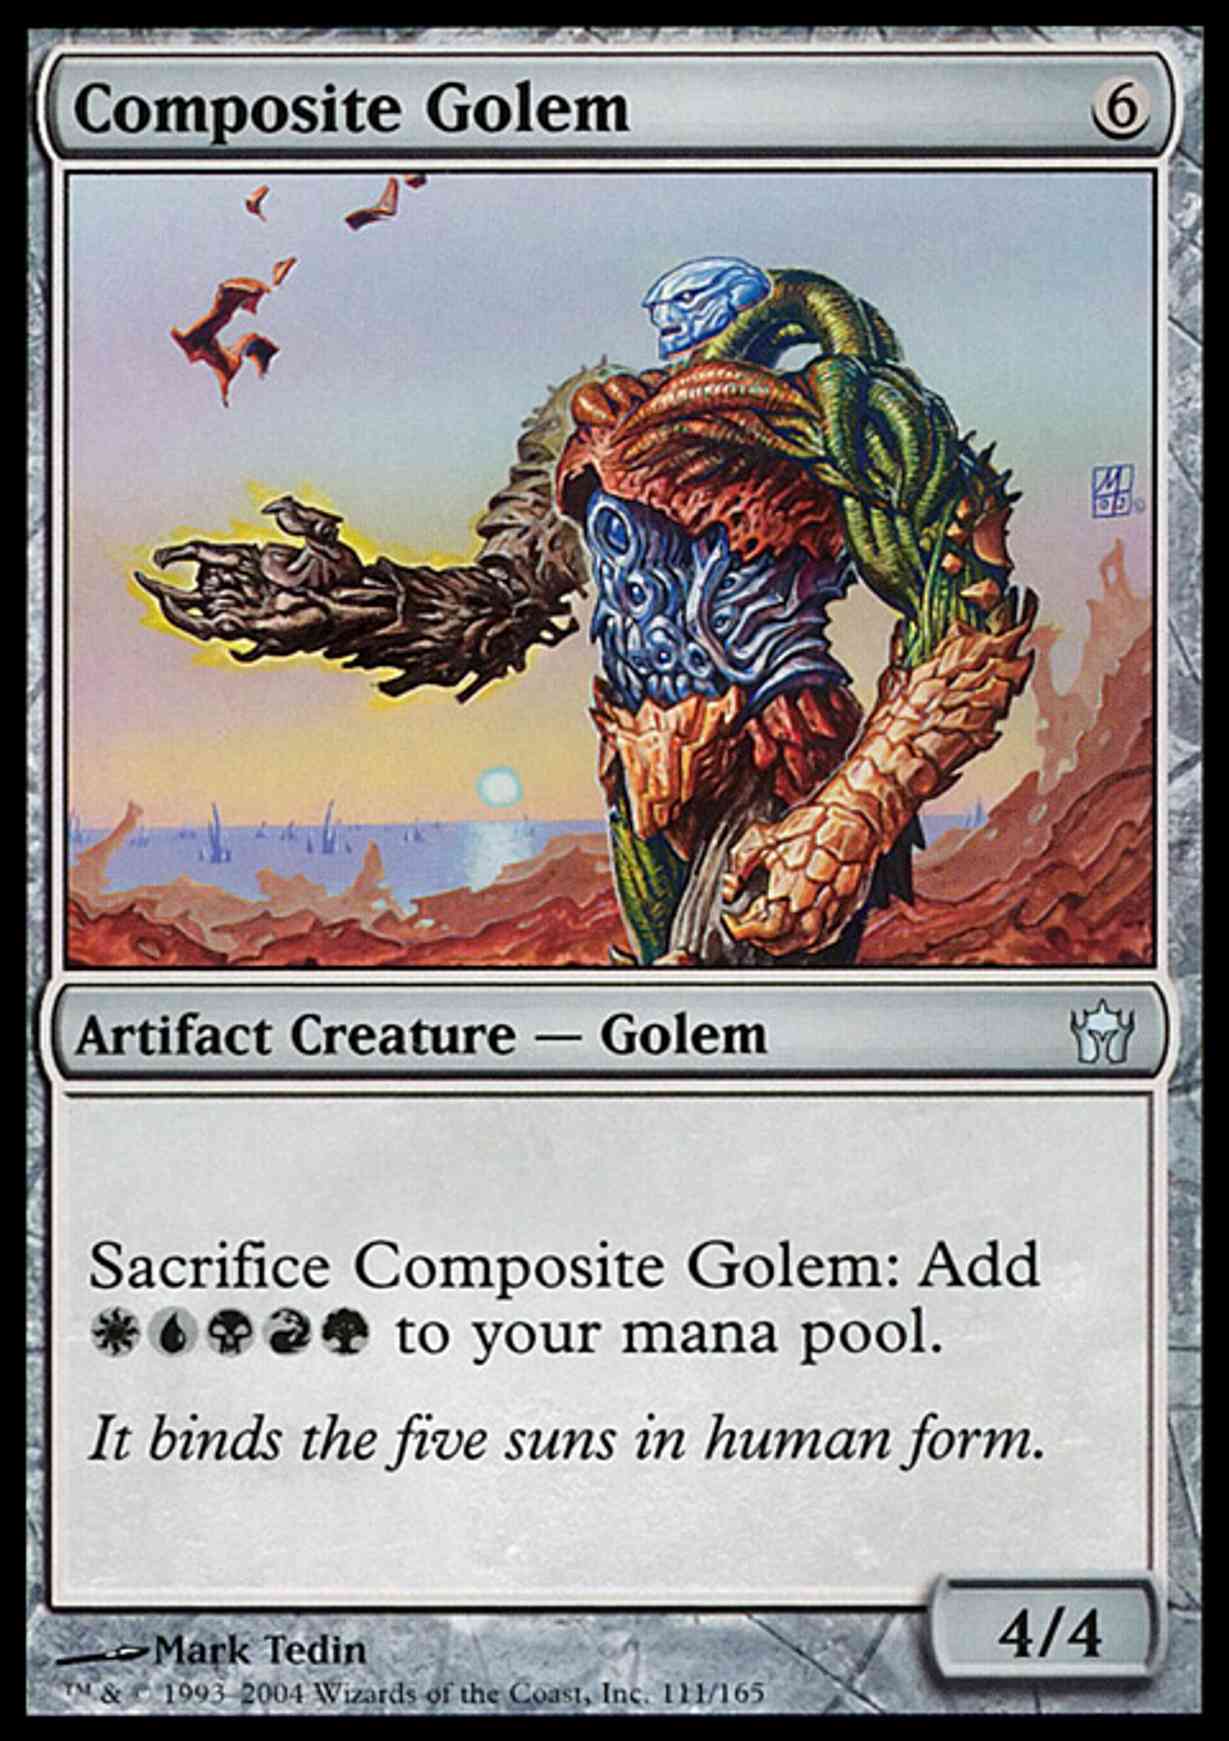 Composite Golem magic card front